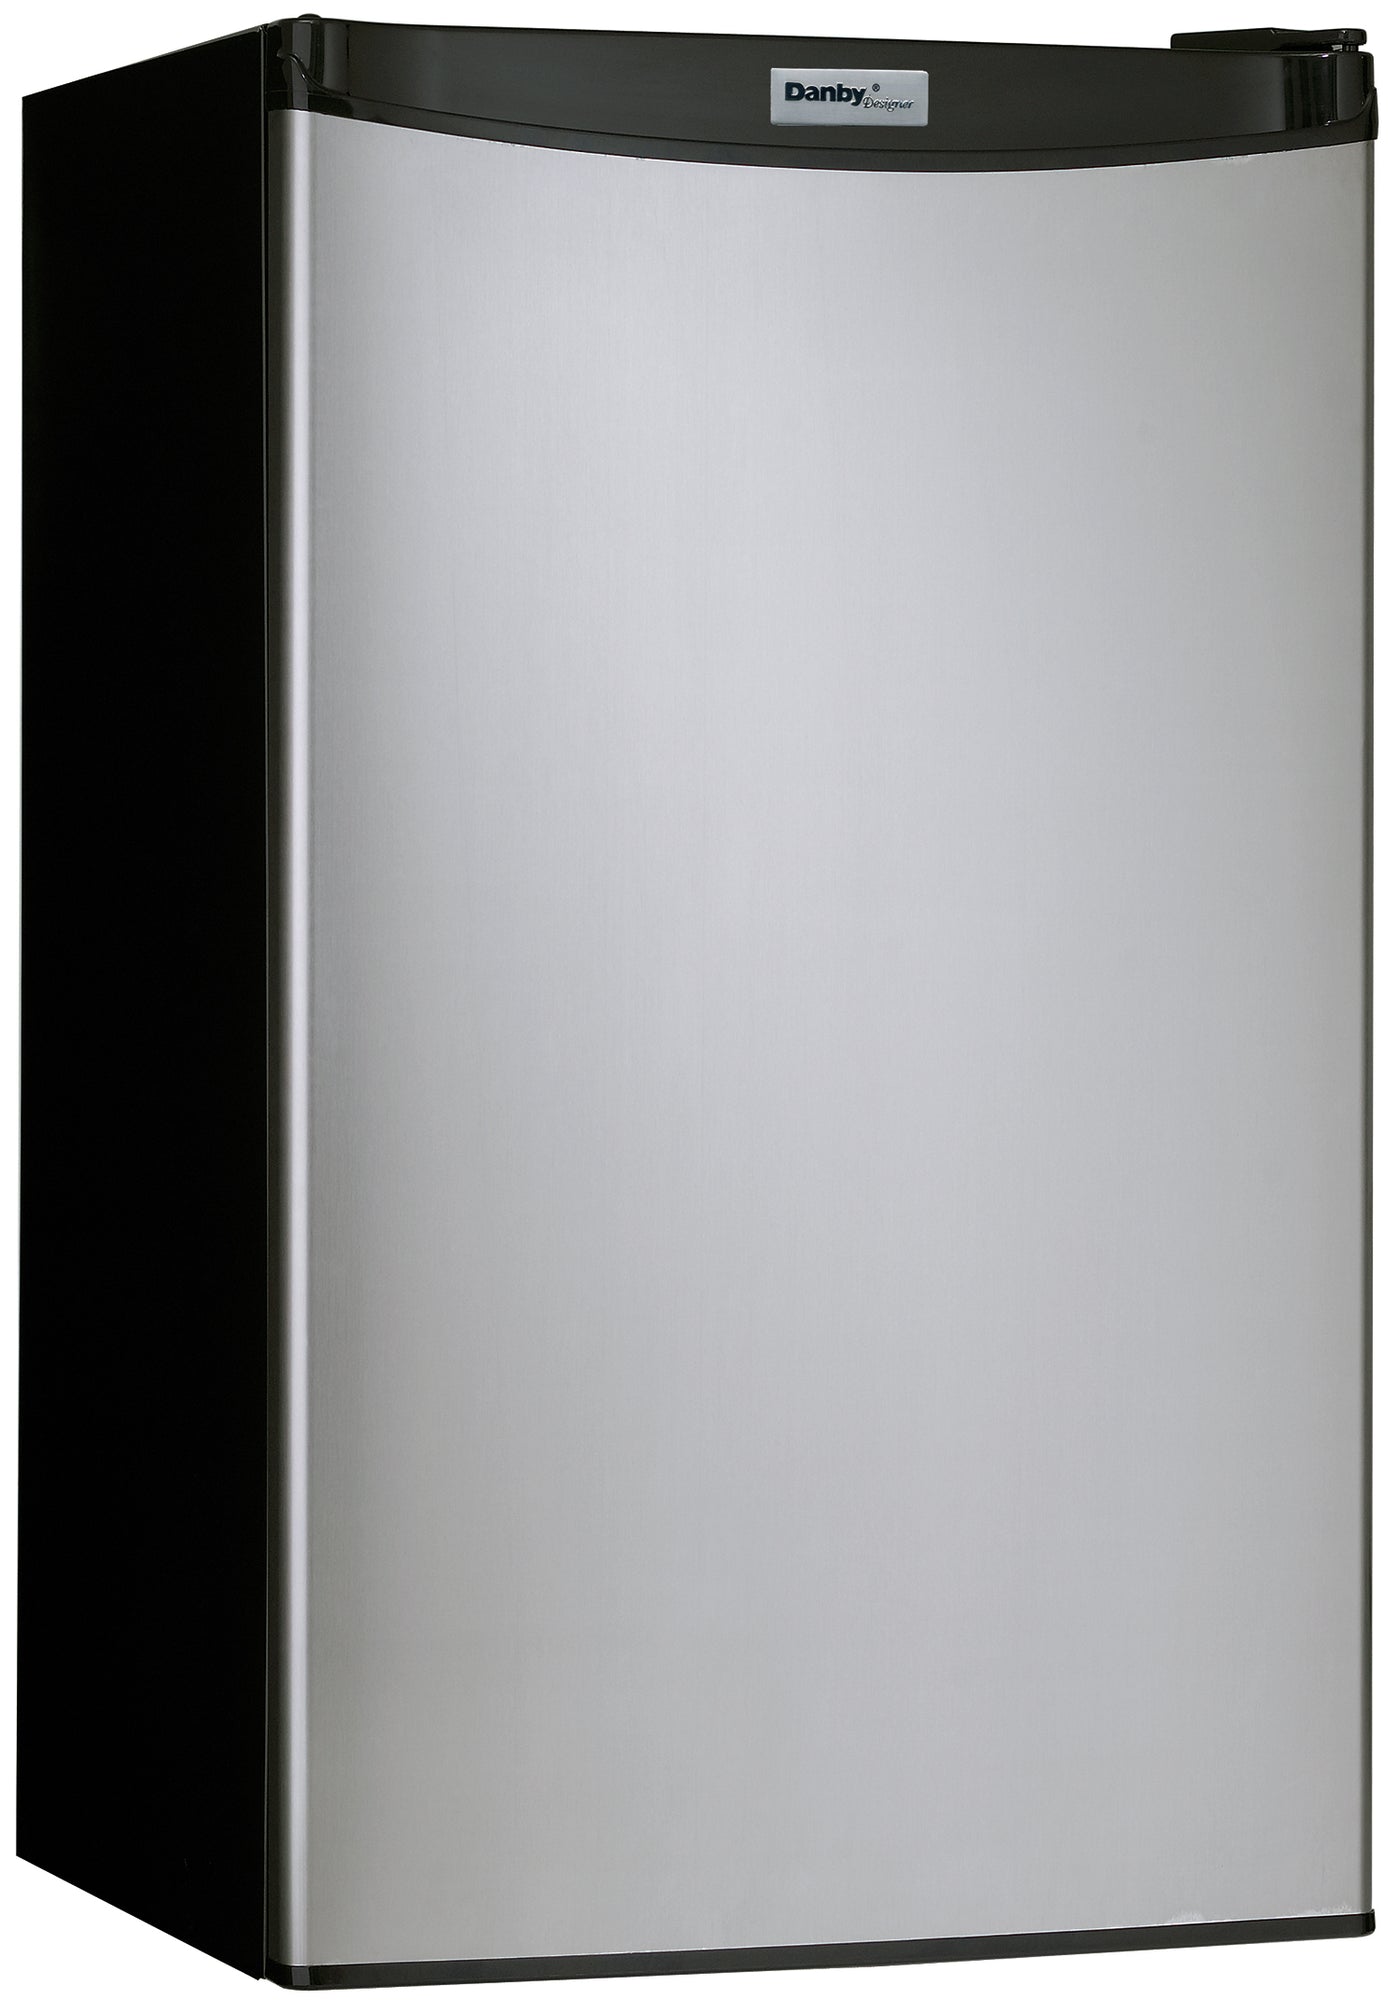 Danby DCR032A2BSLDD Refrigerator/Freezer, 3.2 Cu. Ft., with 18-Month Warranty